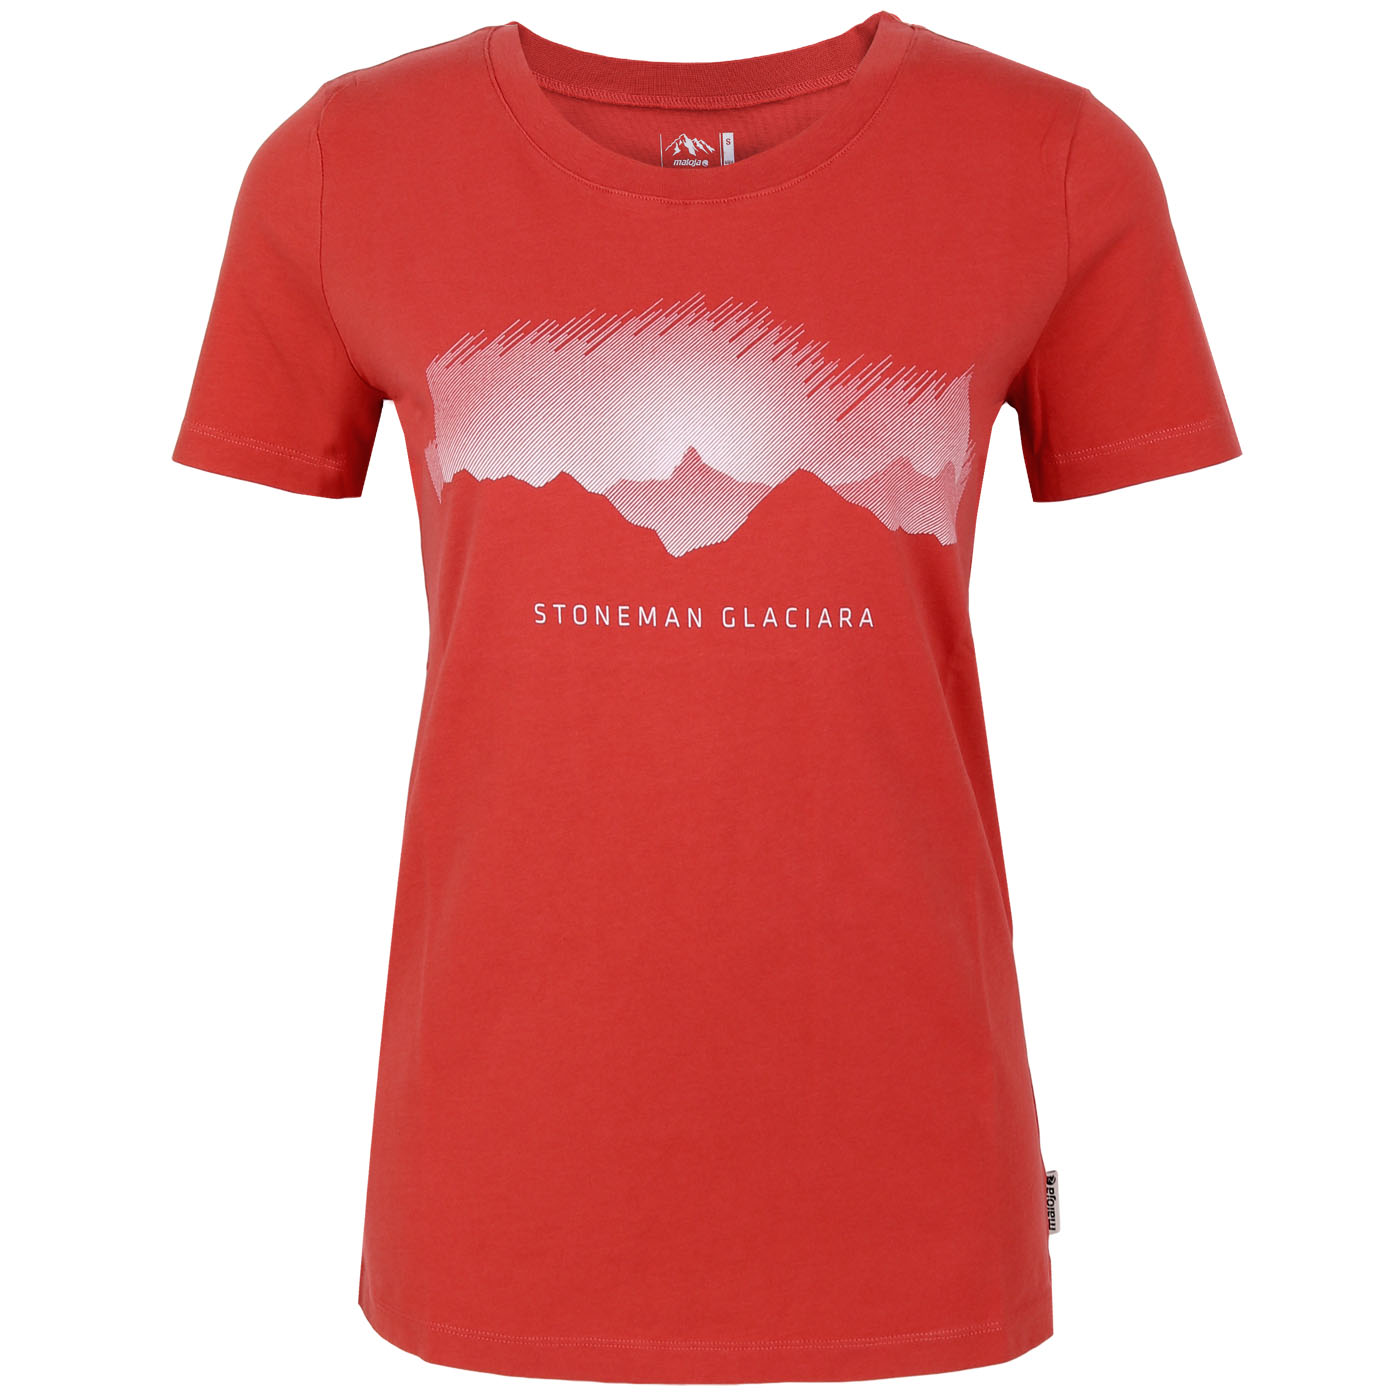 Image of Stoneman Glaciara »Gipfelsturm« Women's T-Shirt by Maloja - vintage red